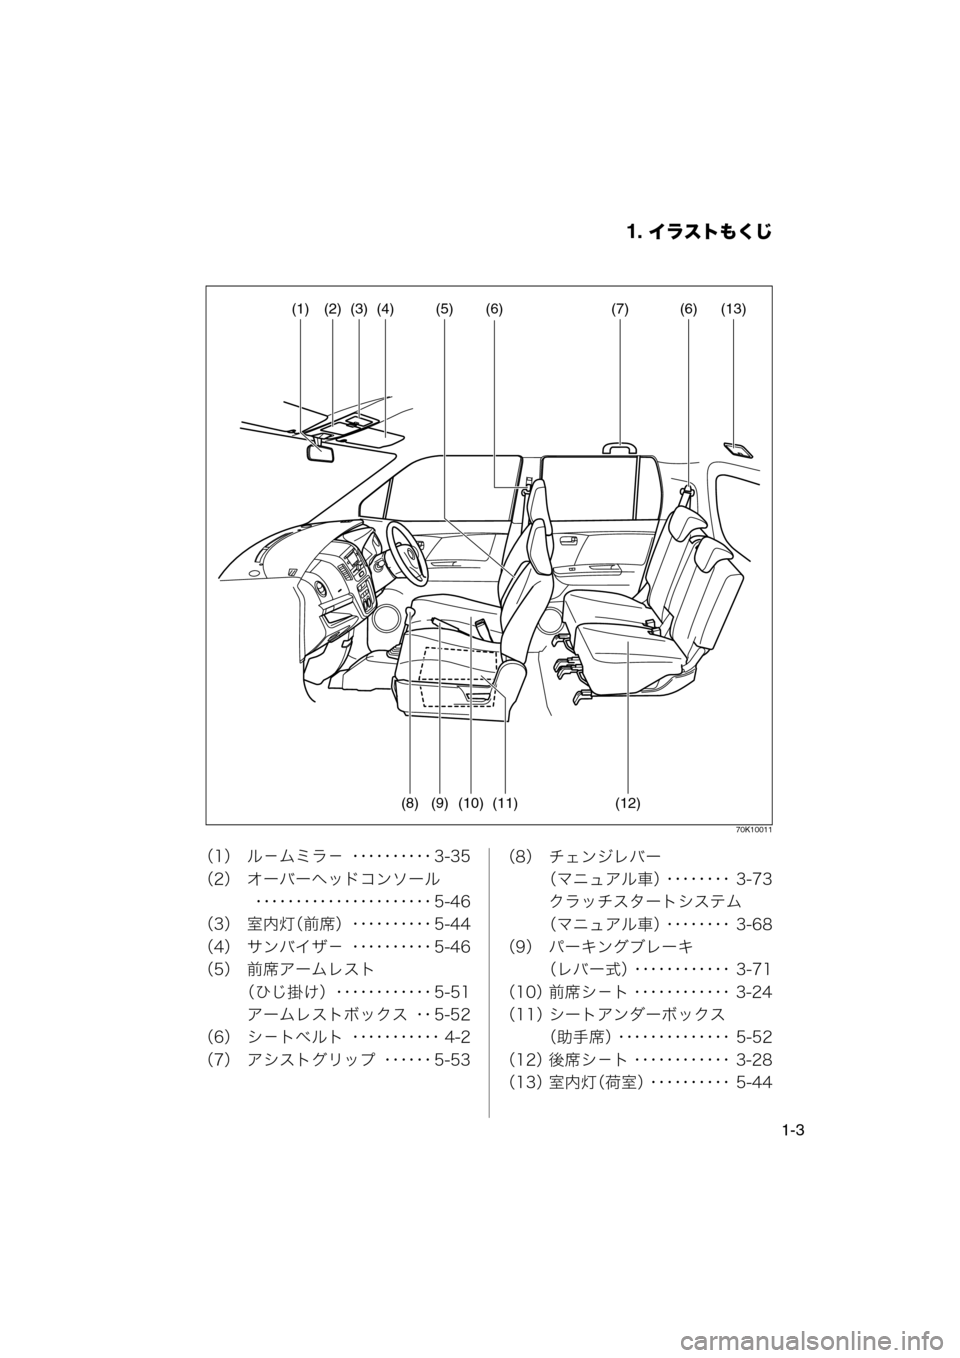 MAZDA MODEL AZ-WAGON 2012  ワゴン｜取扱説明書 (in Japanese) 1. イラストもくじ
1-3
70K10011
（1） ル－ムミラ－ ･･････････ 3-35
（2） オーバーヘッドコンソール･･････････････････�